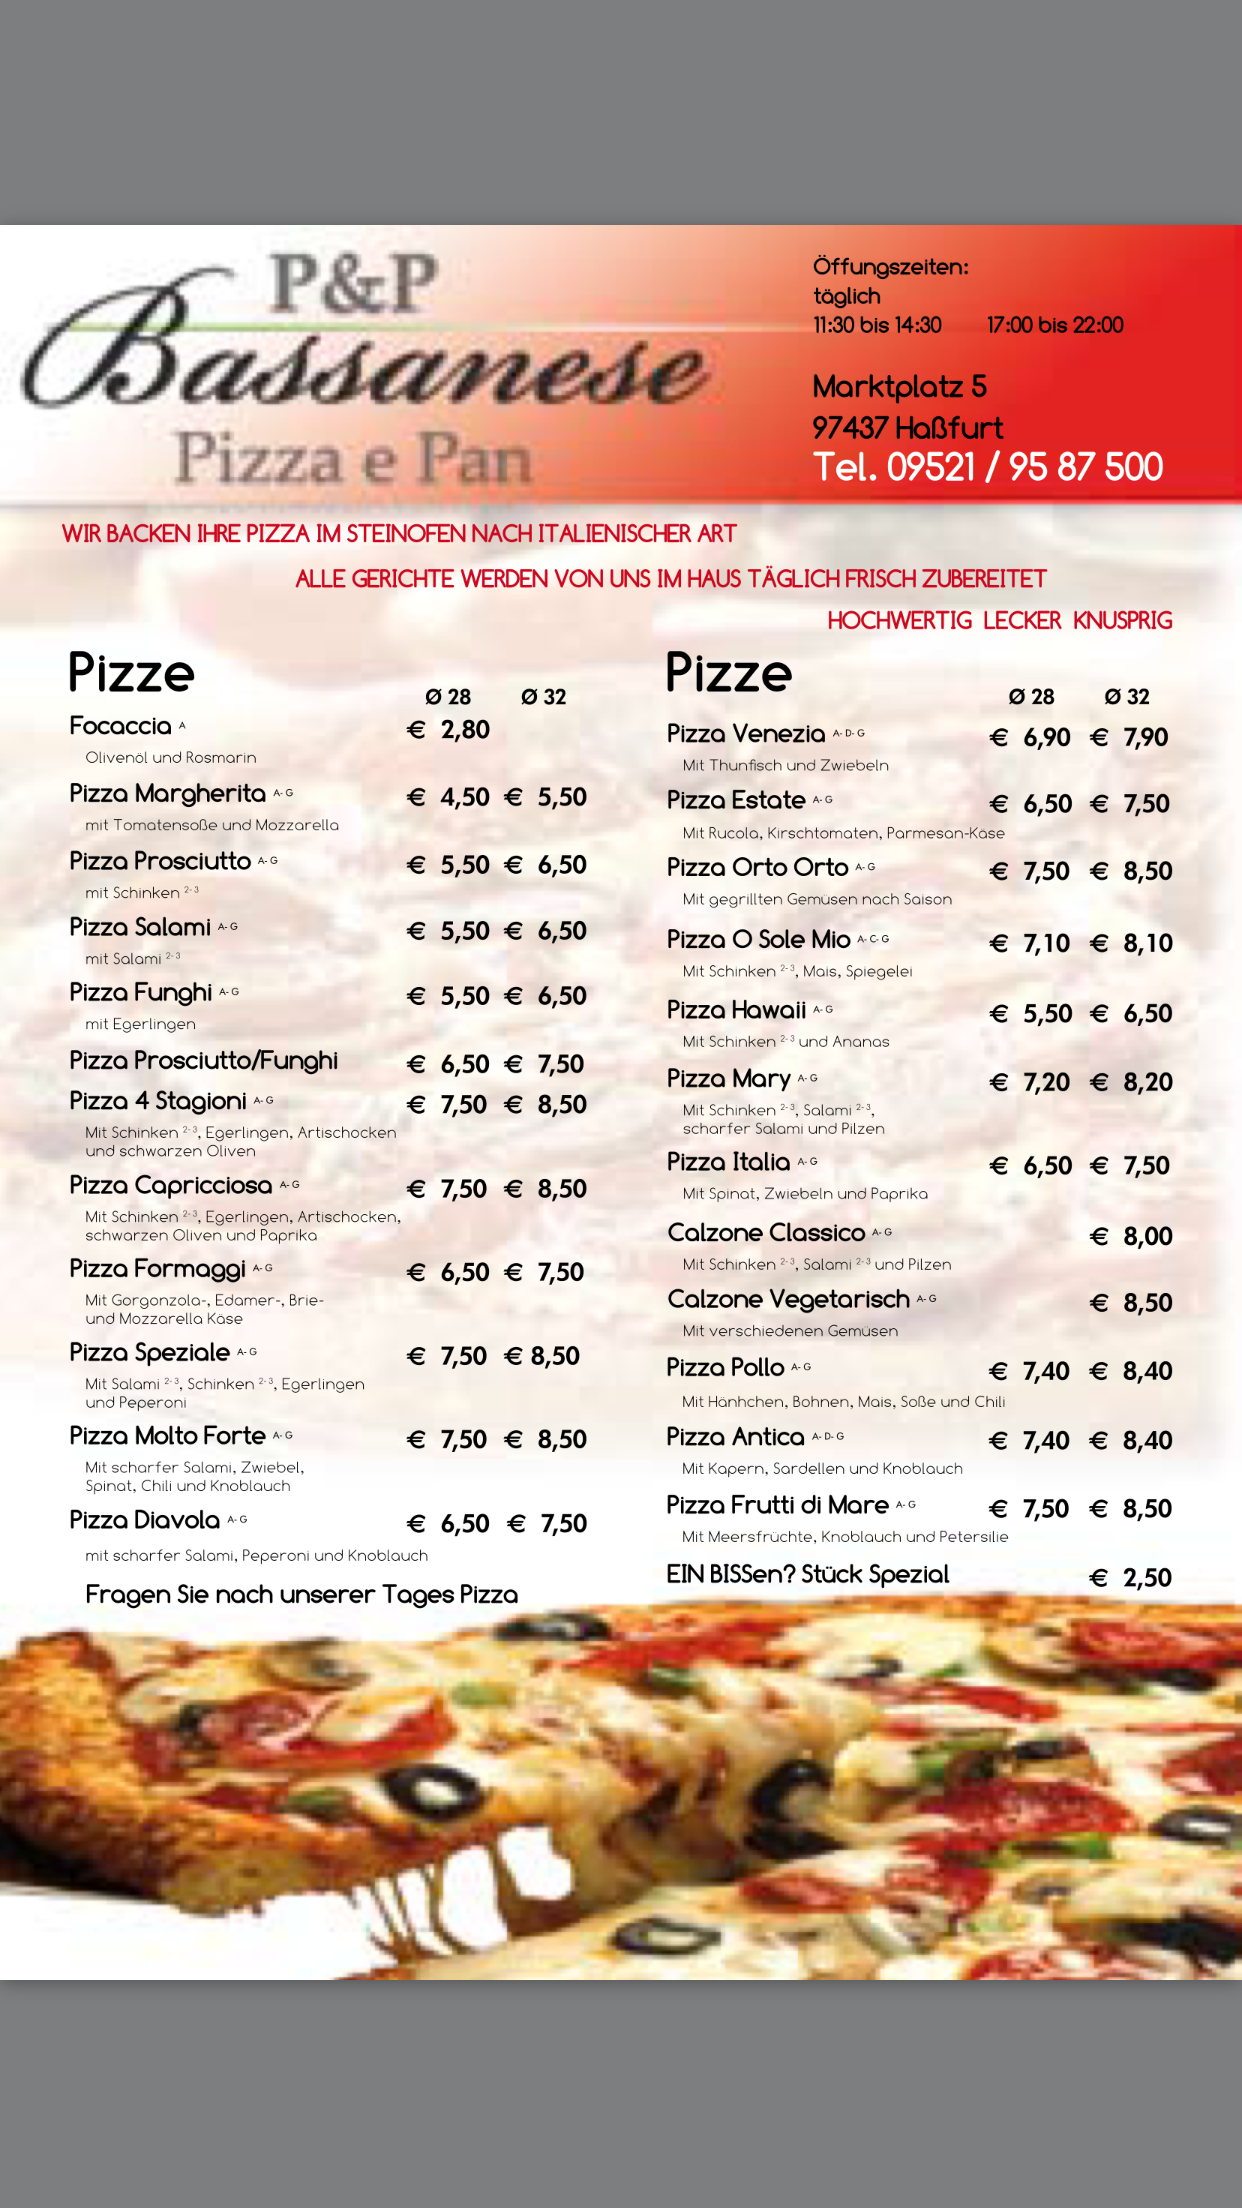 Bild 3 Pizzeria Bassanese PeP Pizza e Pan in Haßfurt